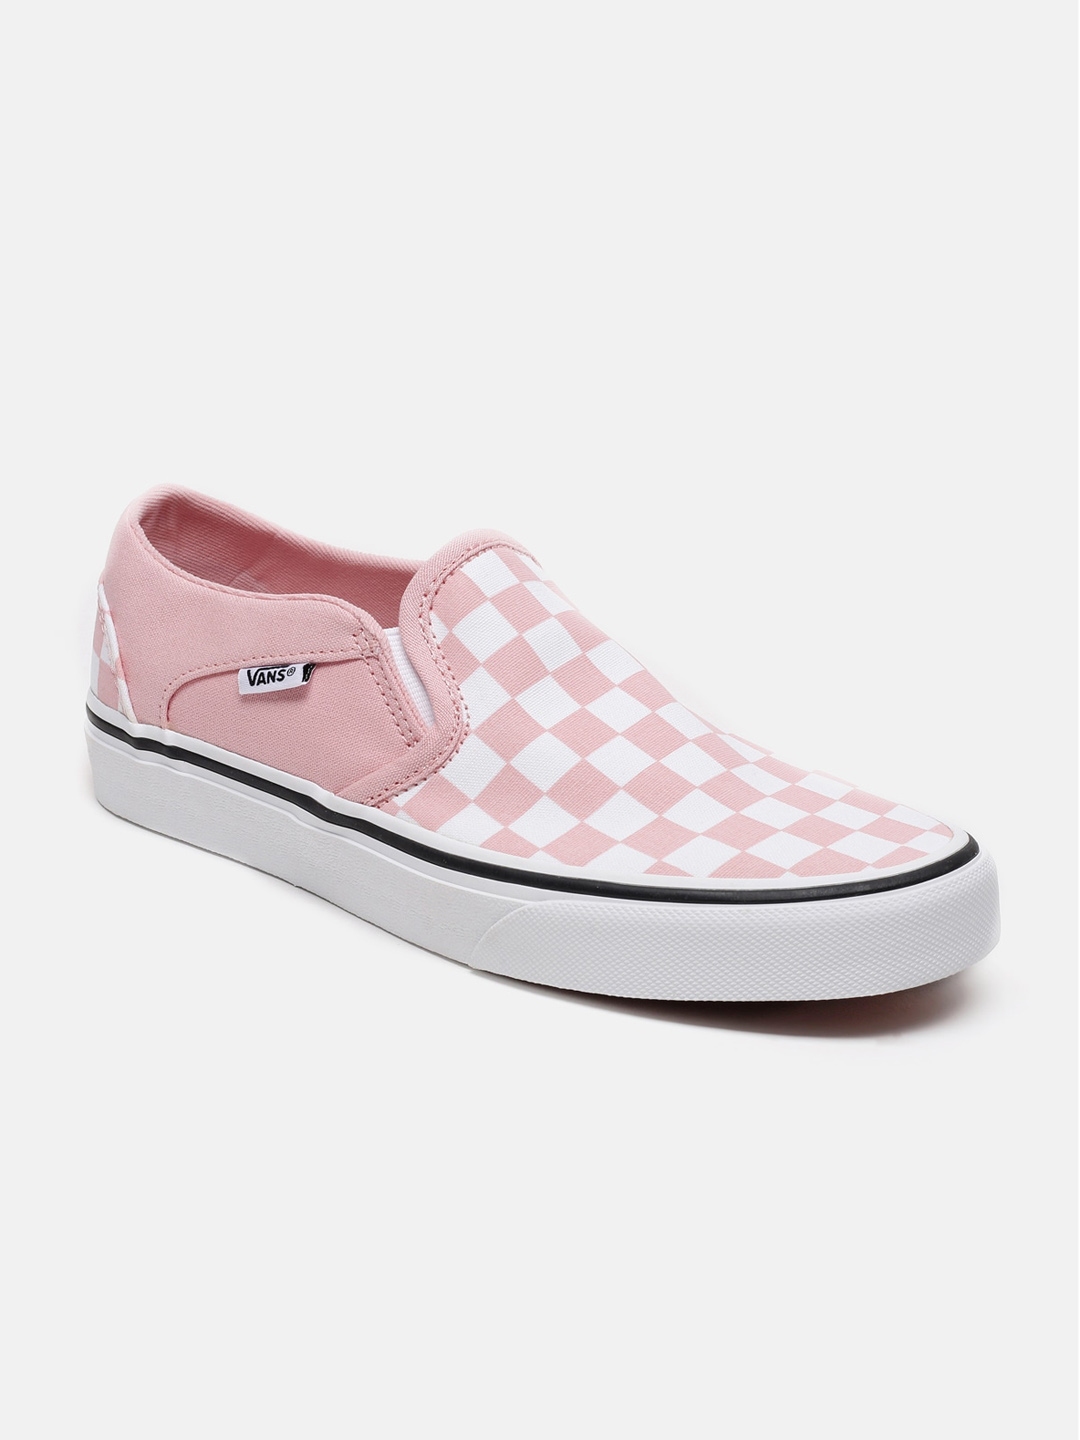 Buy Vans Women Pink Printed Slip On Sneakers Casual Shoes For Women